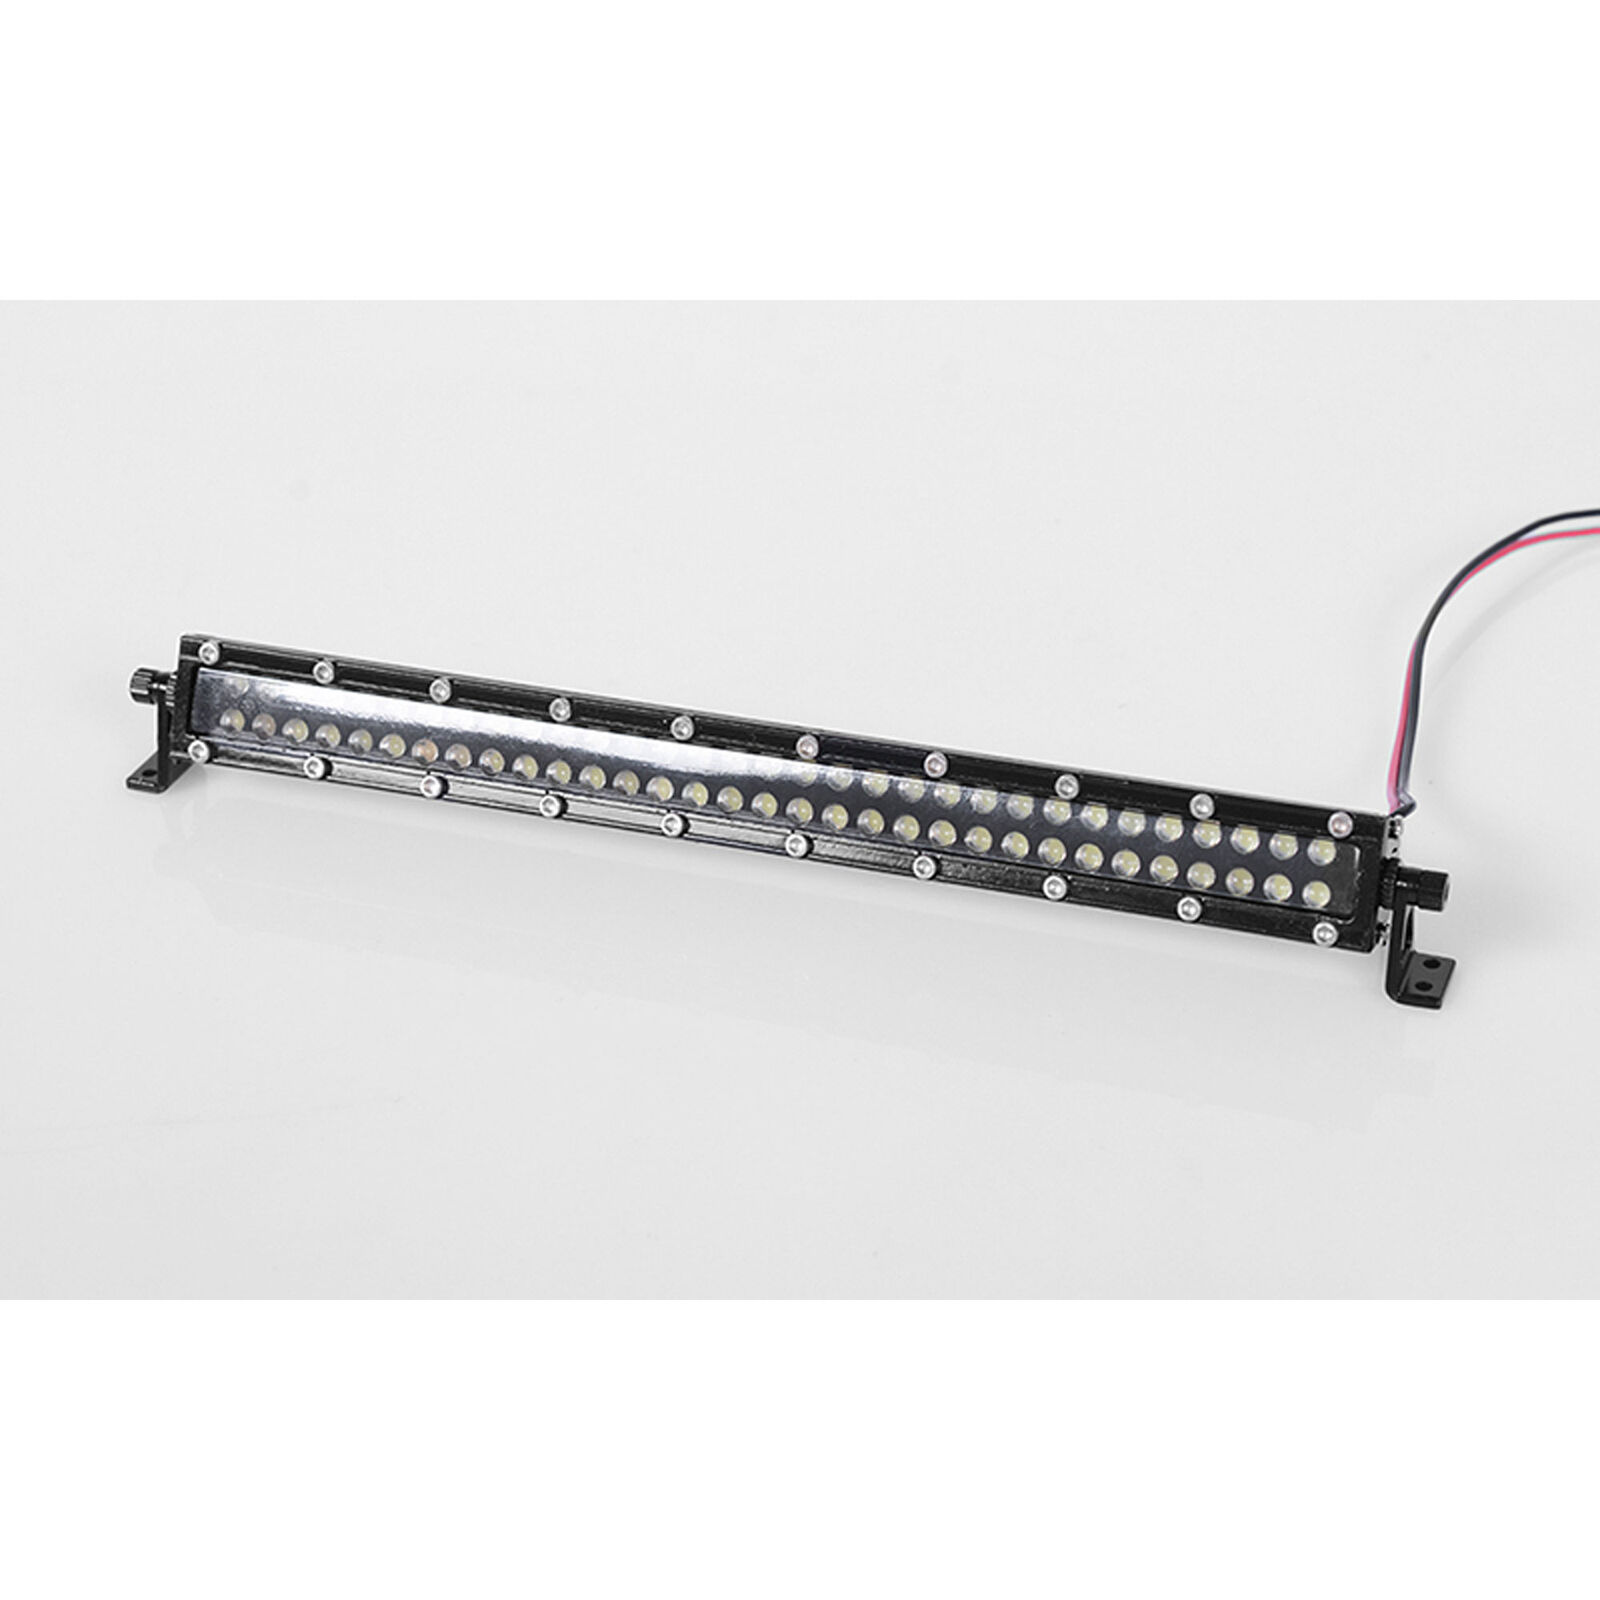 1/10 High Performance LED Light Bar, 150mm/6"